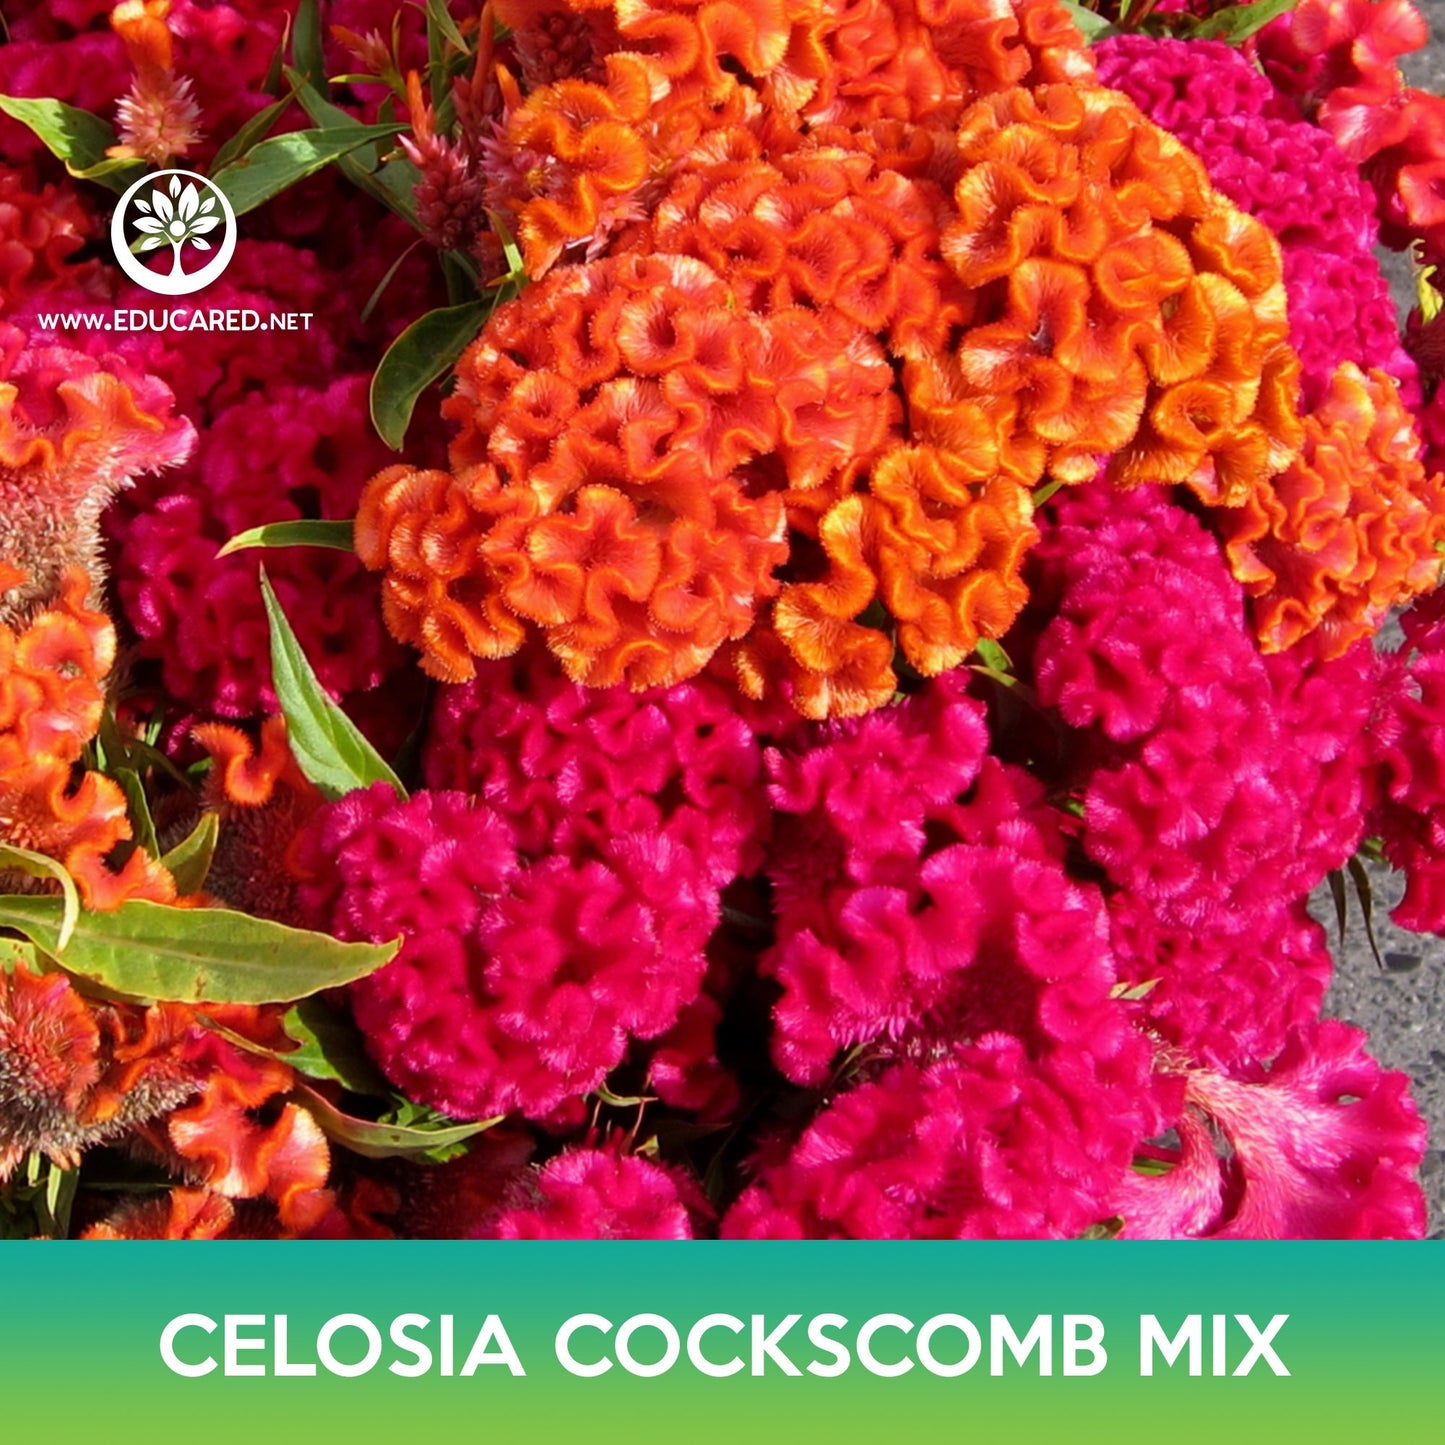 Celosia Cockscomb Flower Mix Seeds, Celosia argentea var cristata